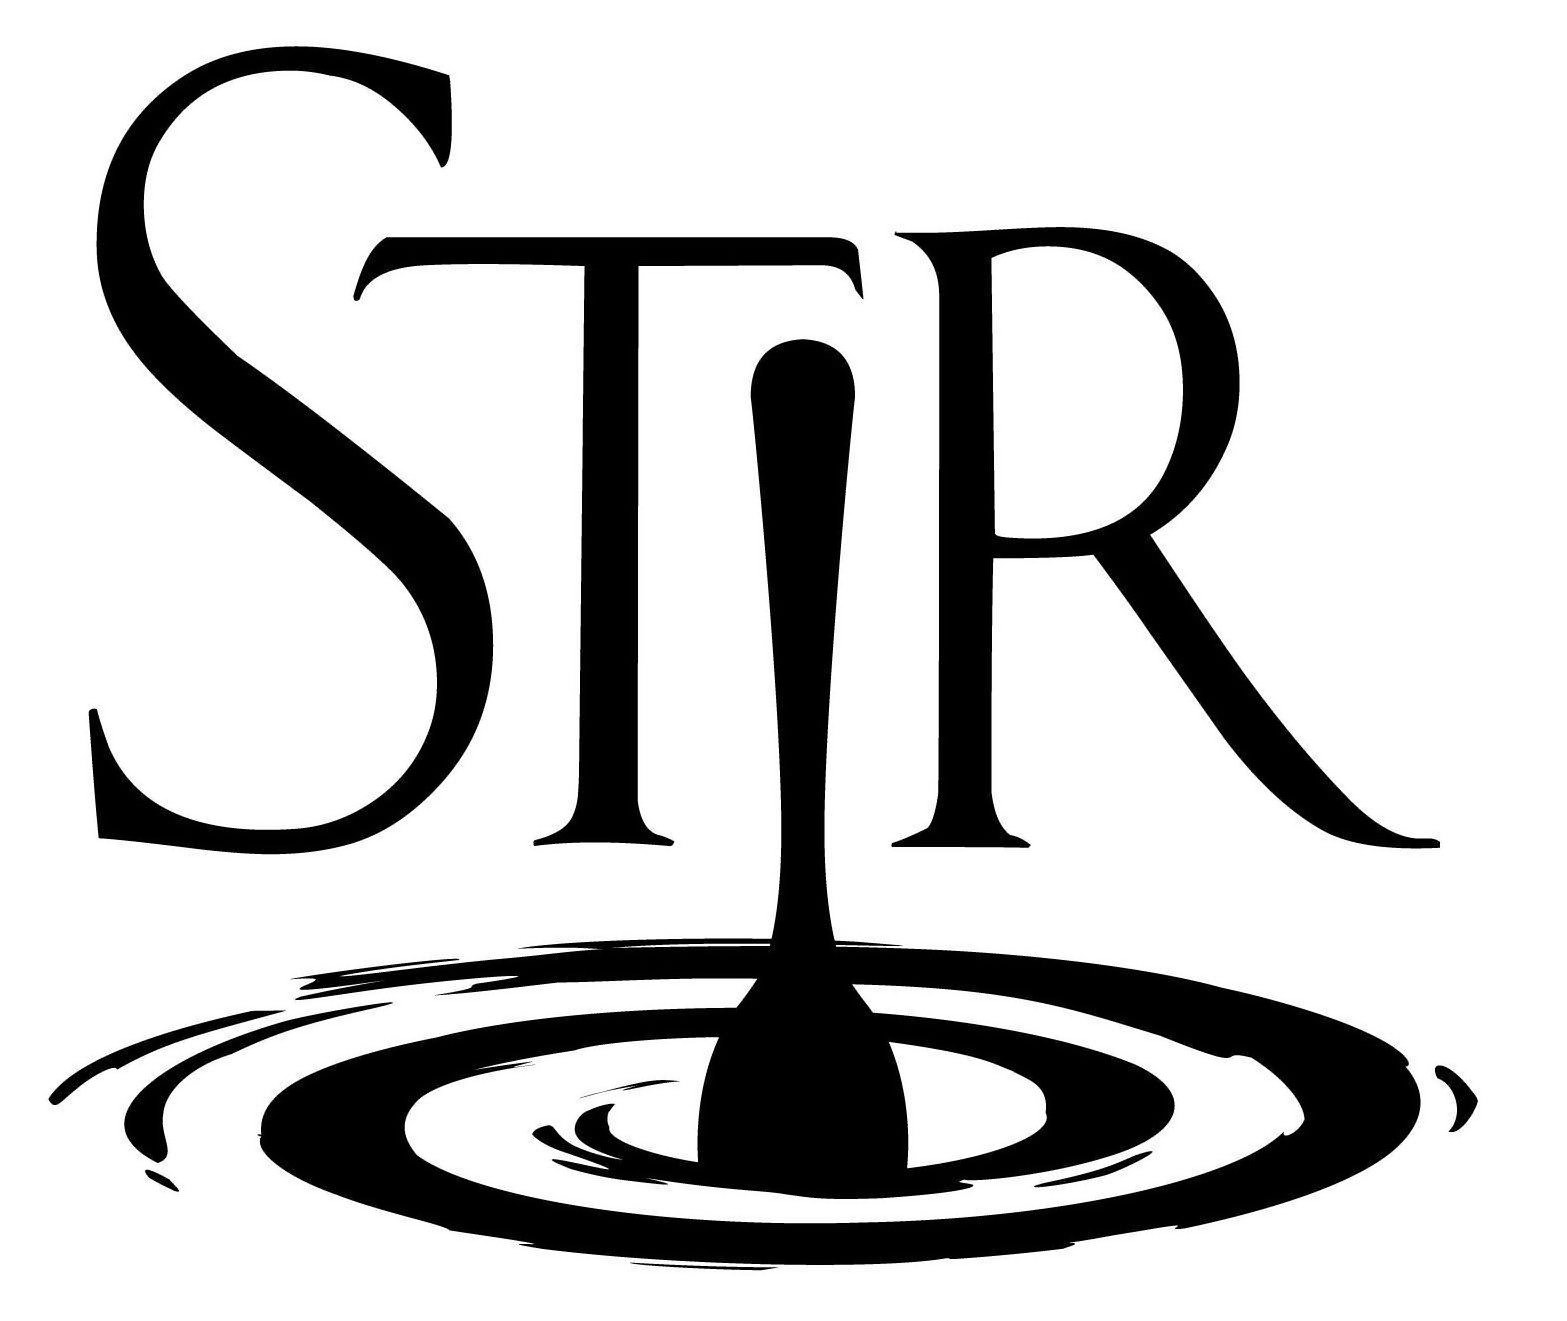 Trademark Logo STIR